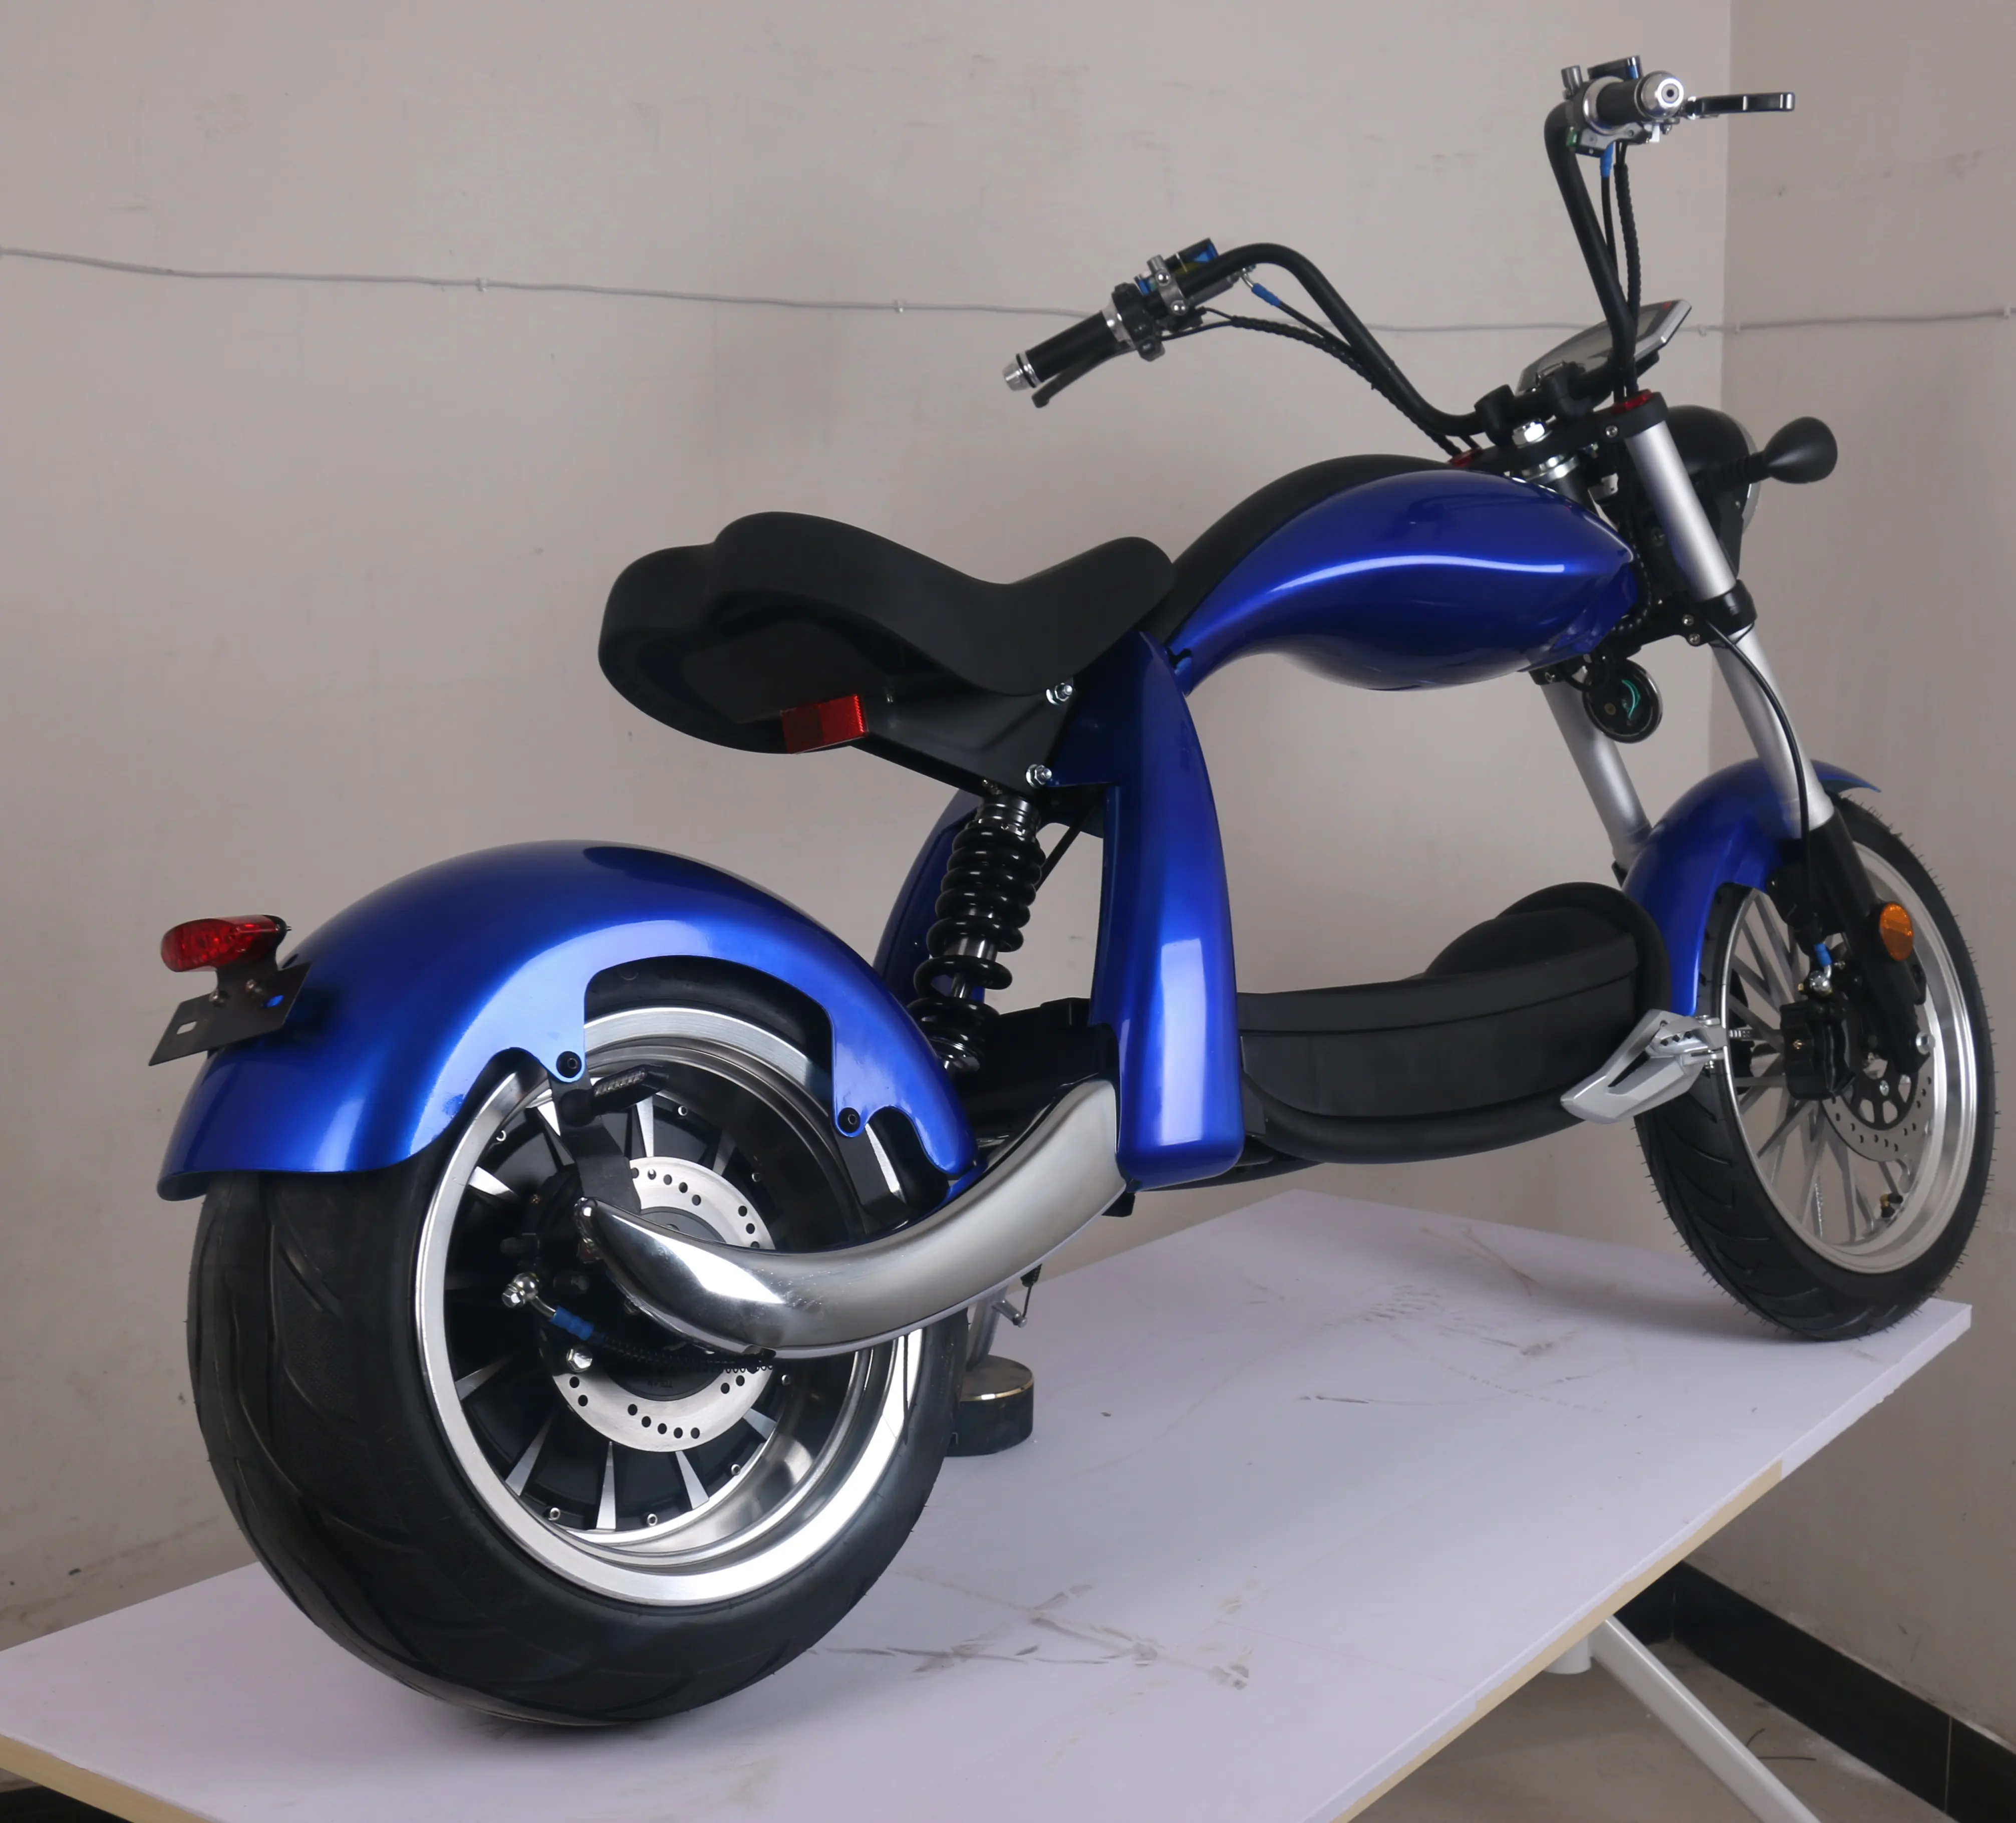 moto electrique electric citycoco motos electrica 2000w electric chopper motorcycle scooter european warehouse